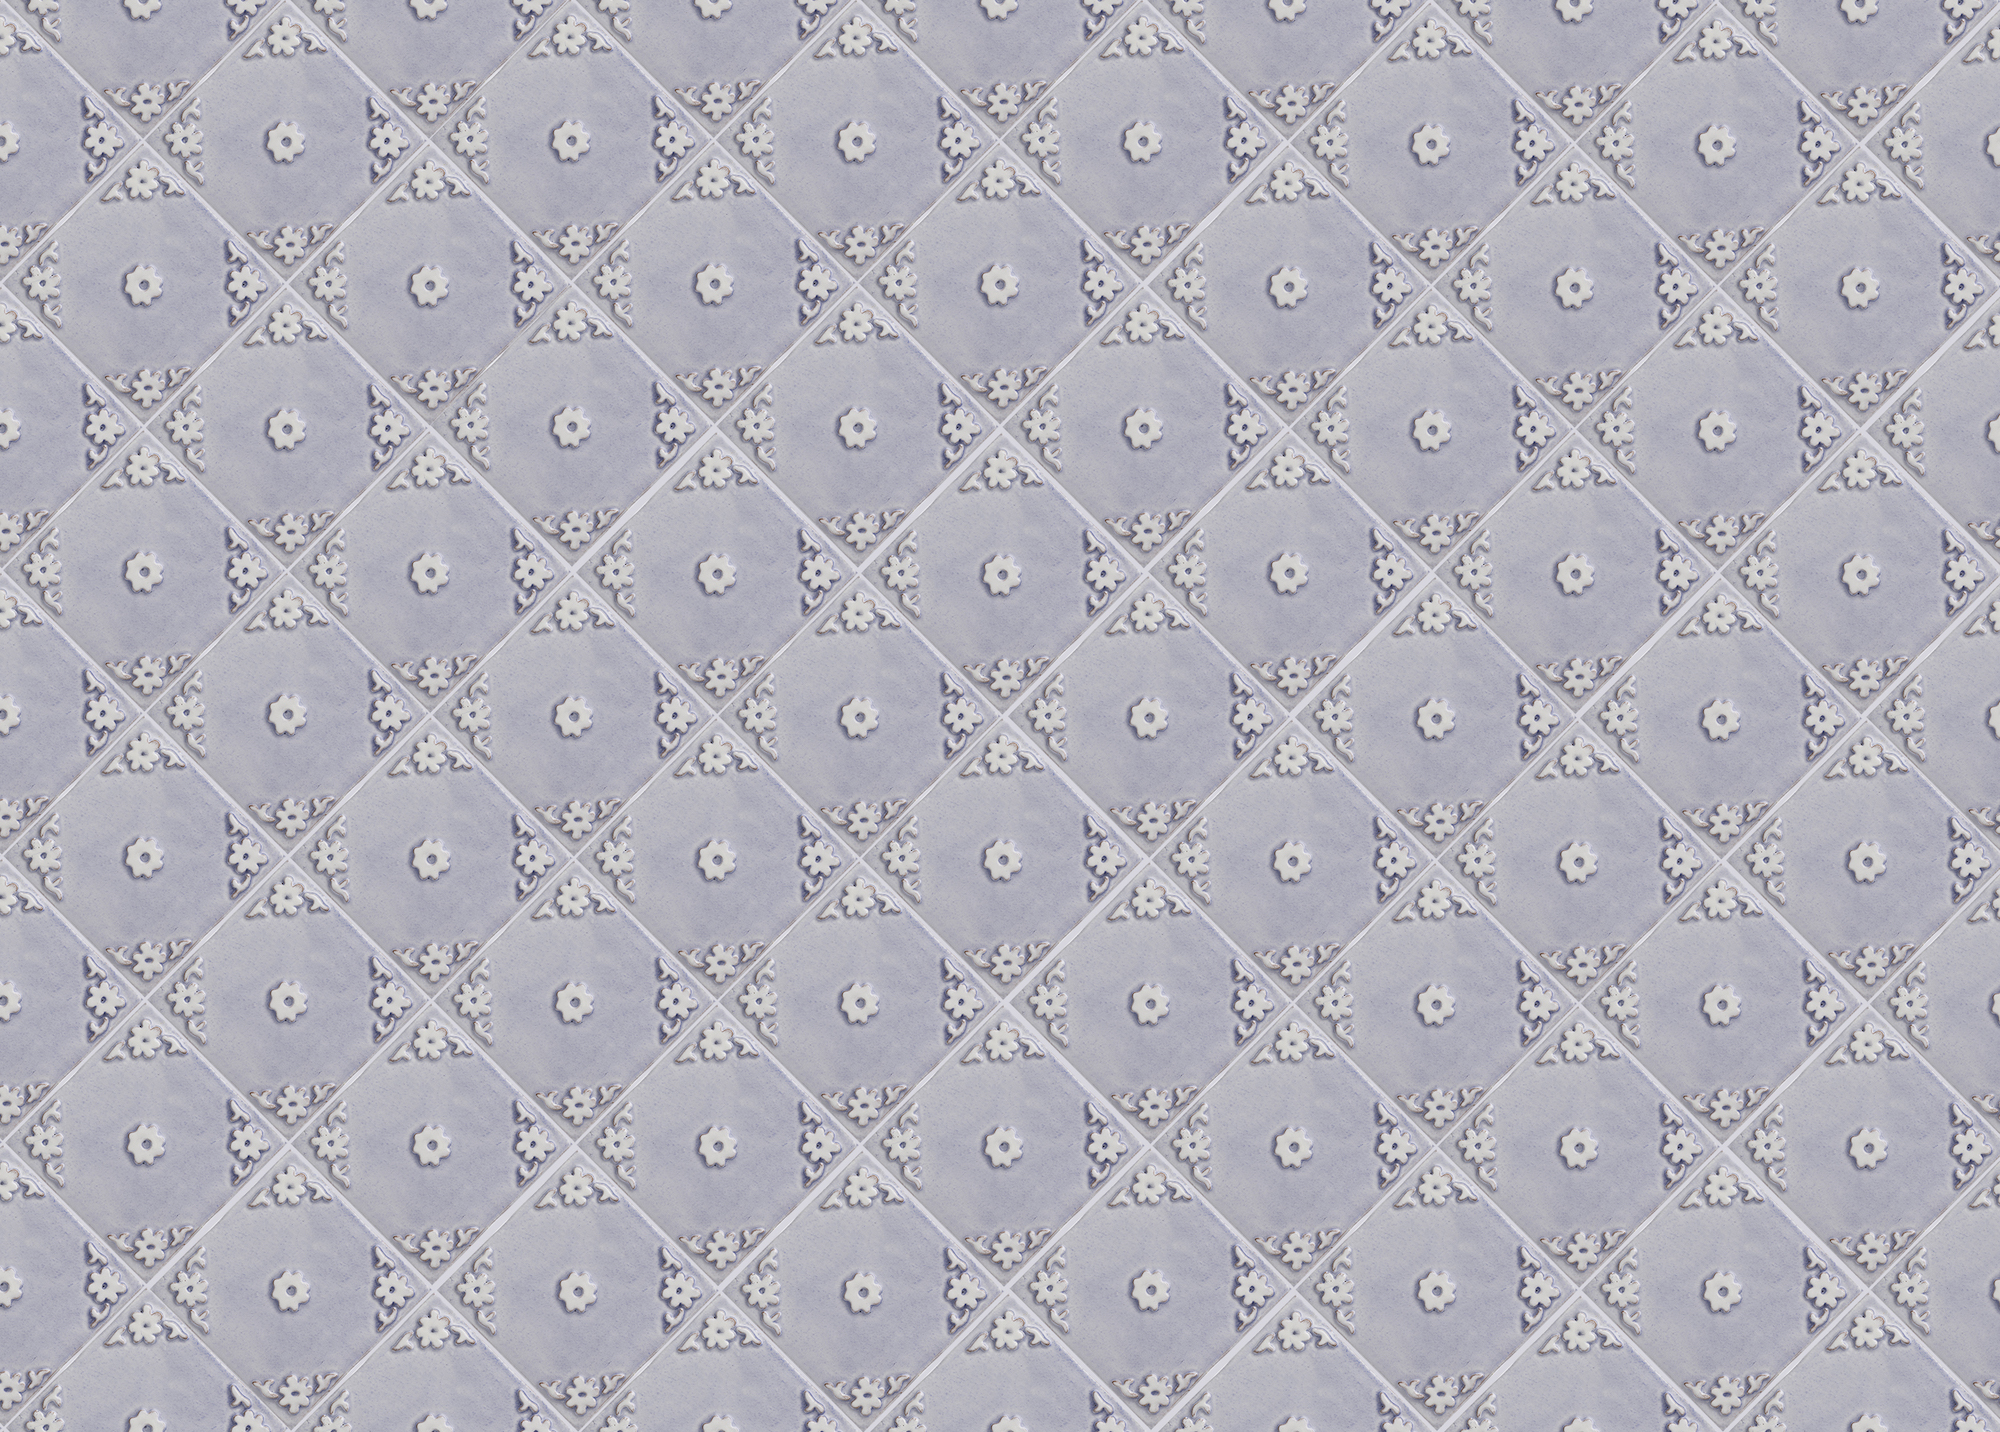 Tuscon Tile Colorful Flower Squares Fabric by Elizabeth's Studio - modeS4u